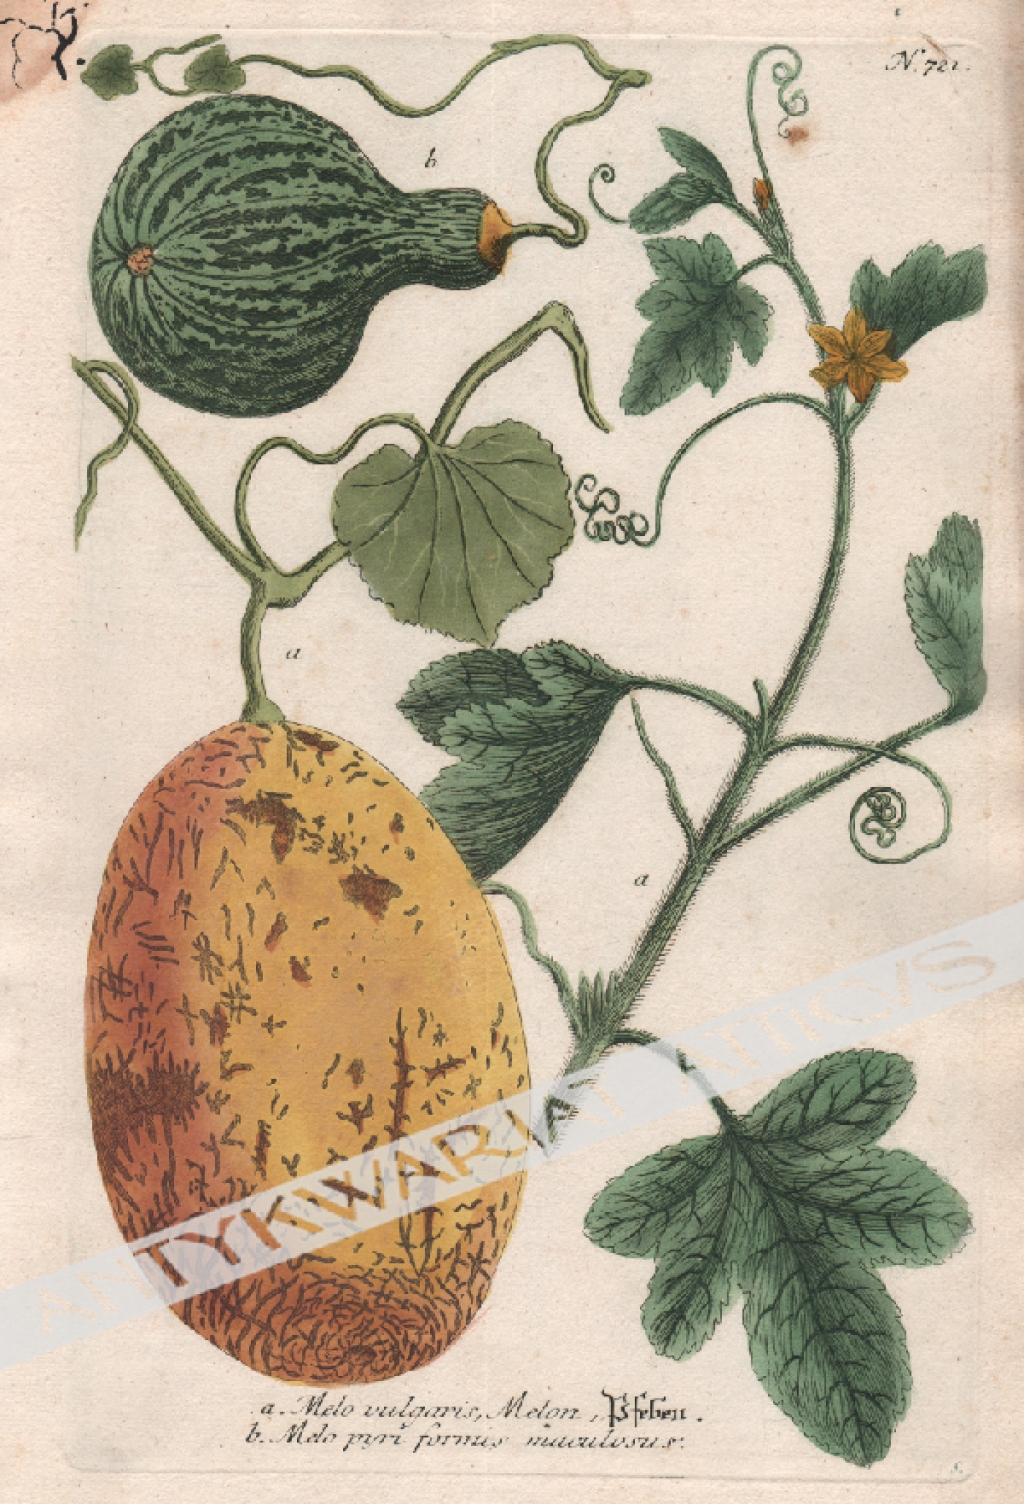 [rycina, 1737-1745][Melon] a. Melo vulgaris, Melon; b. Melon pyri formis maculosus